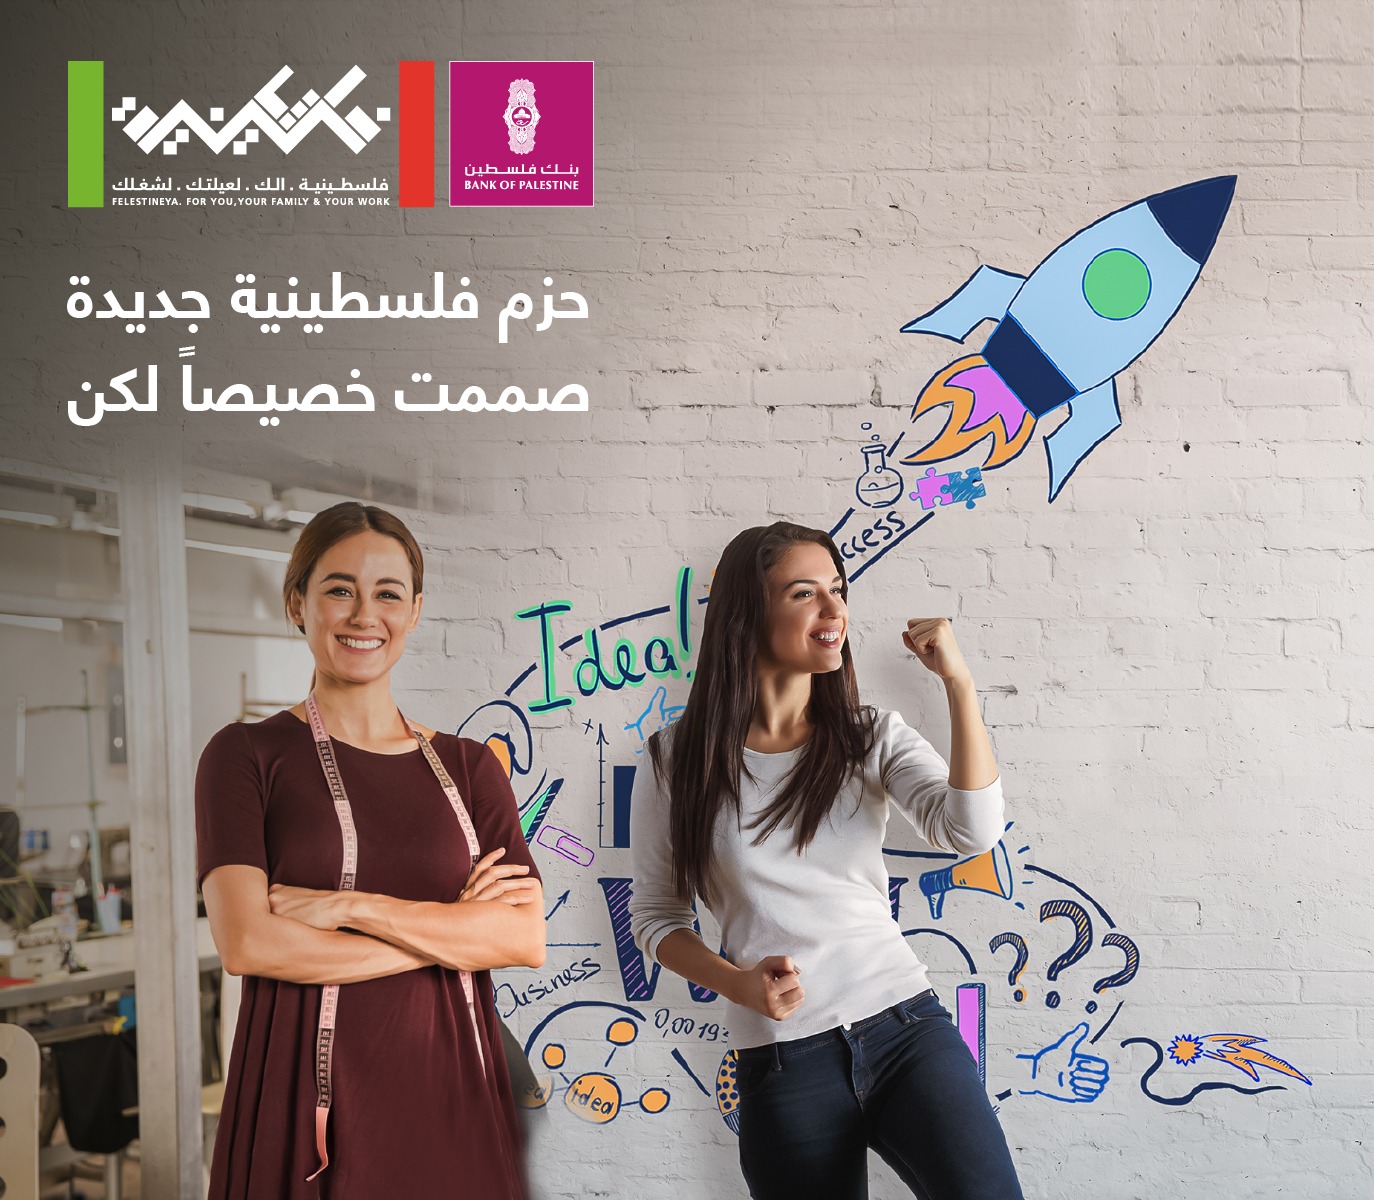 Under the Felestineya program, Bank of Palestine launches two bundles for businesswomen and women entrepreneurs